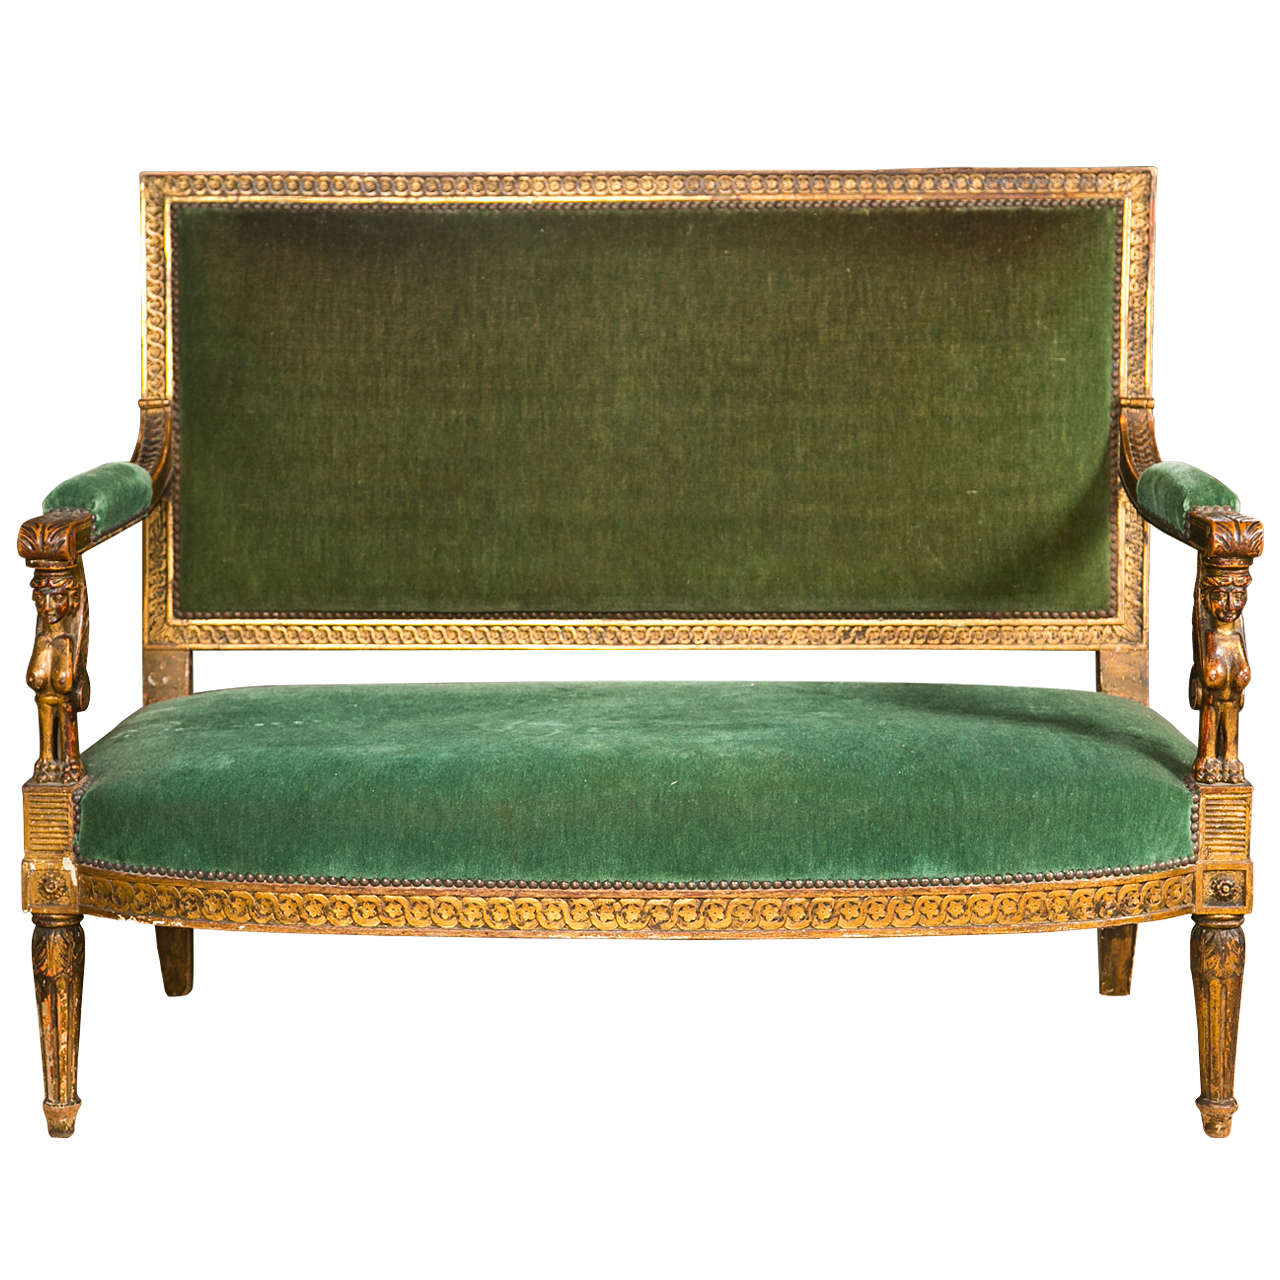 19th c Egyptian Revival Gilt Sofa